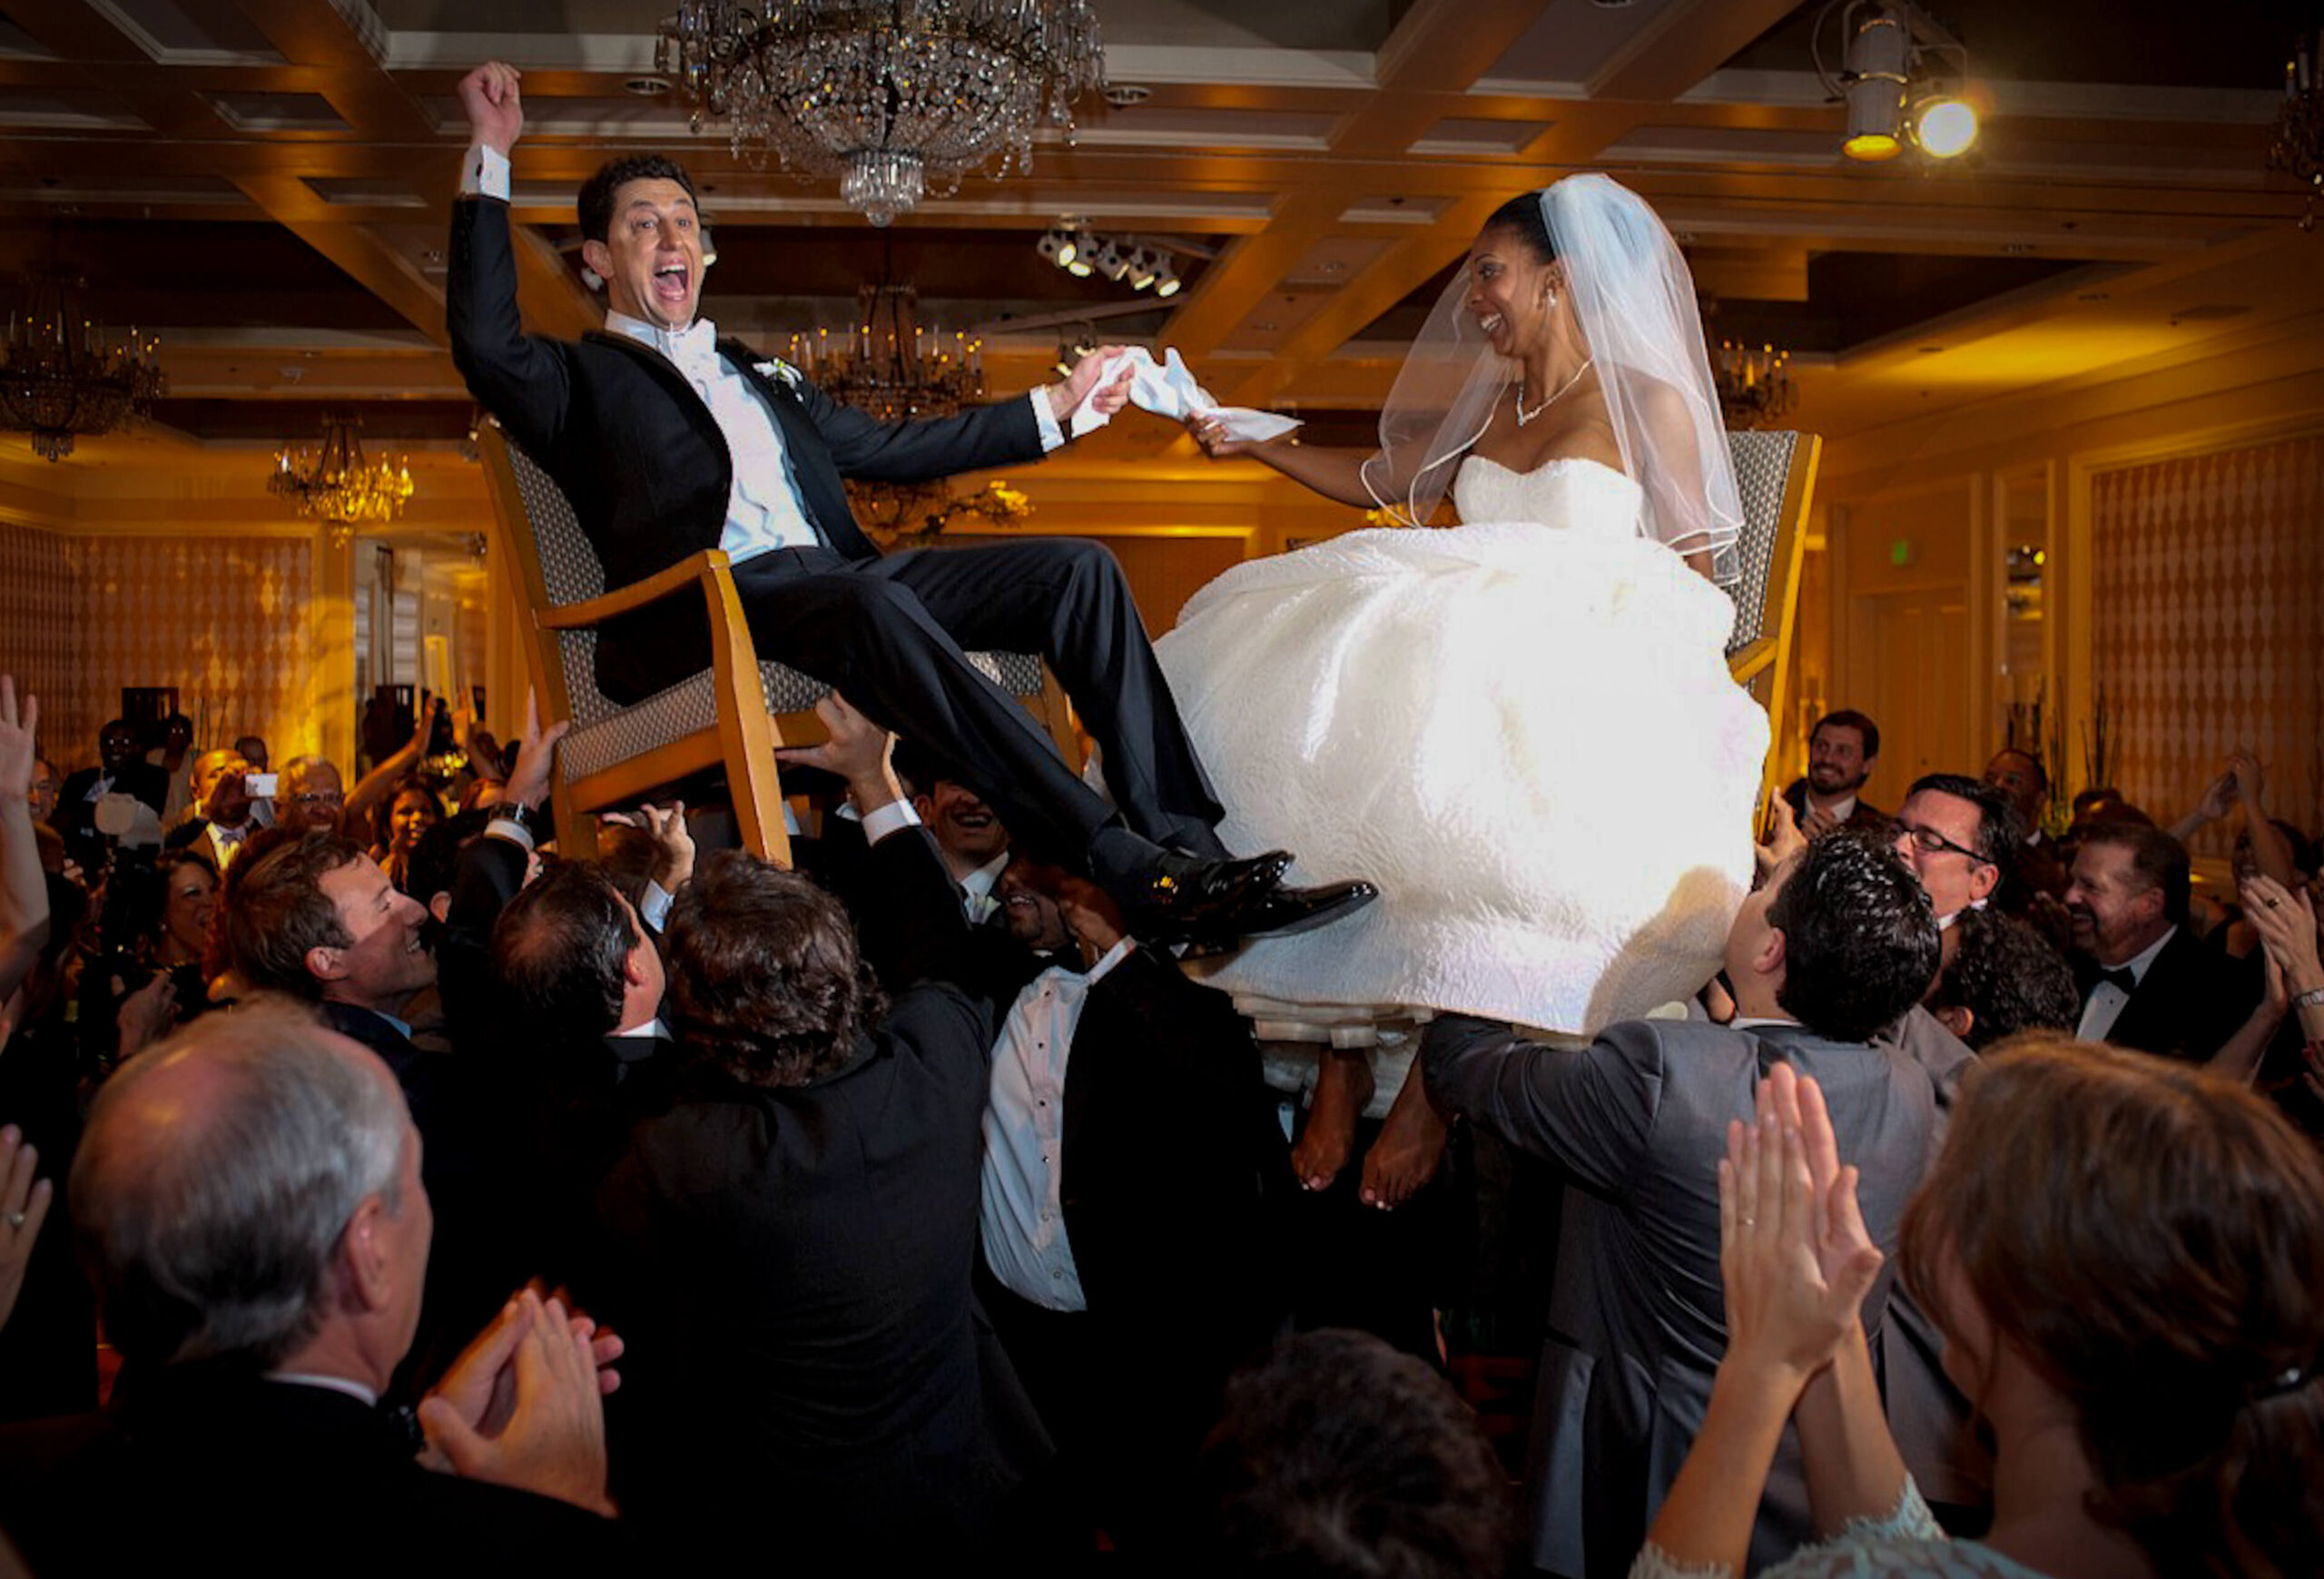 fun jewish wedding dance tradition in the grand ballroom at the logan hotel